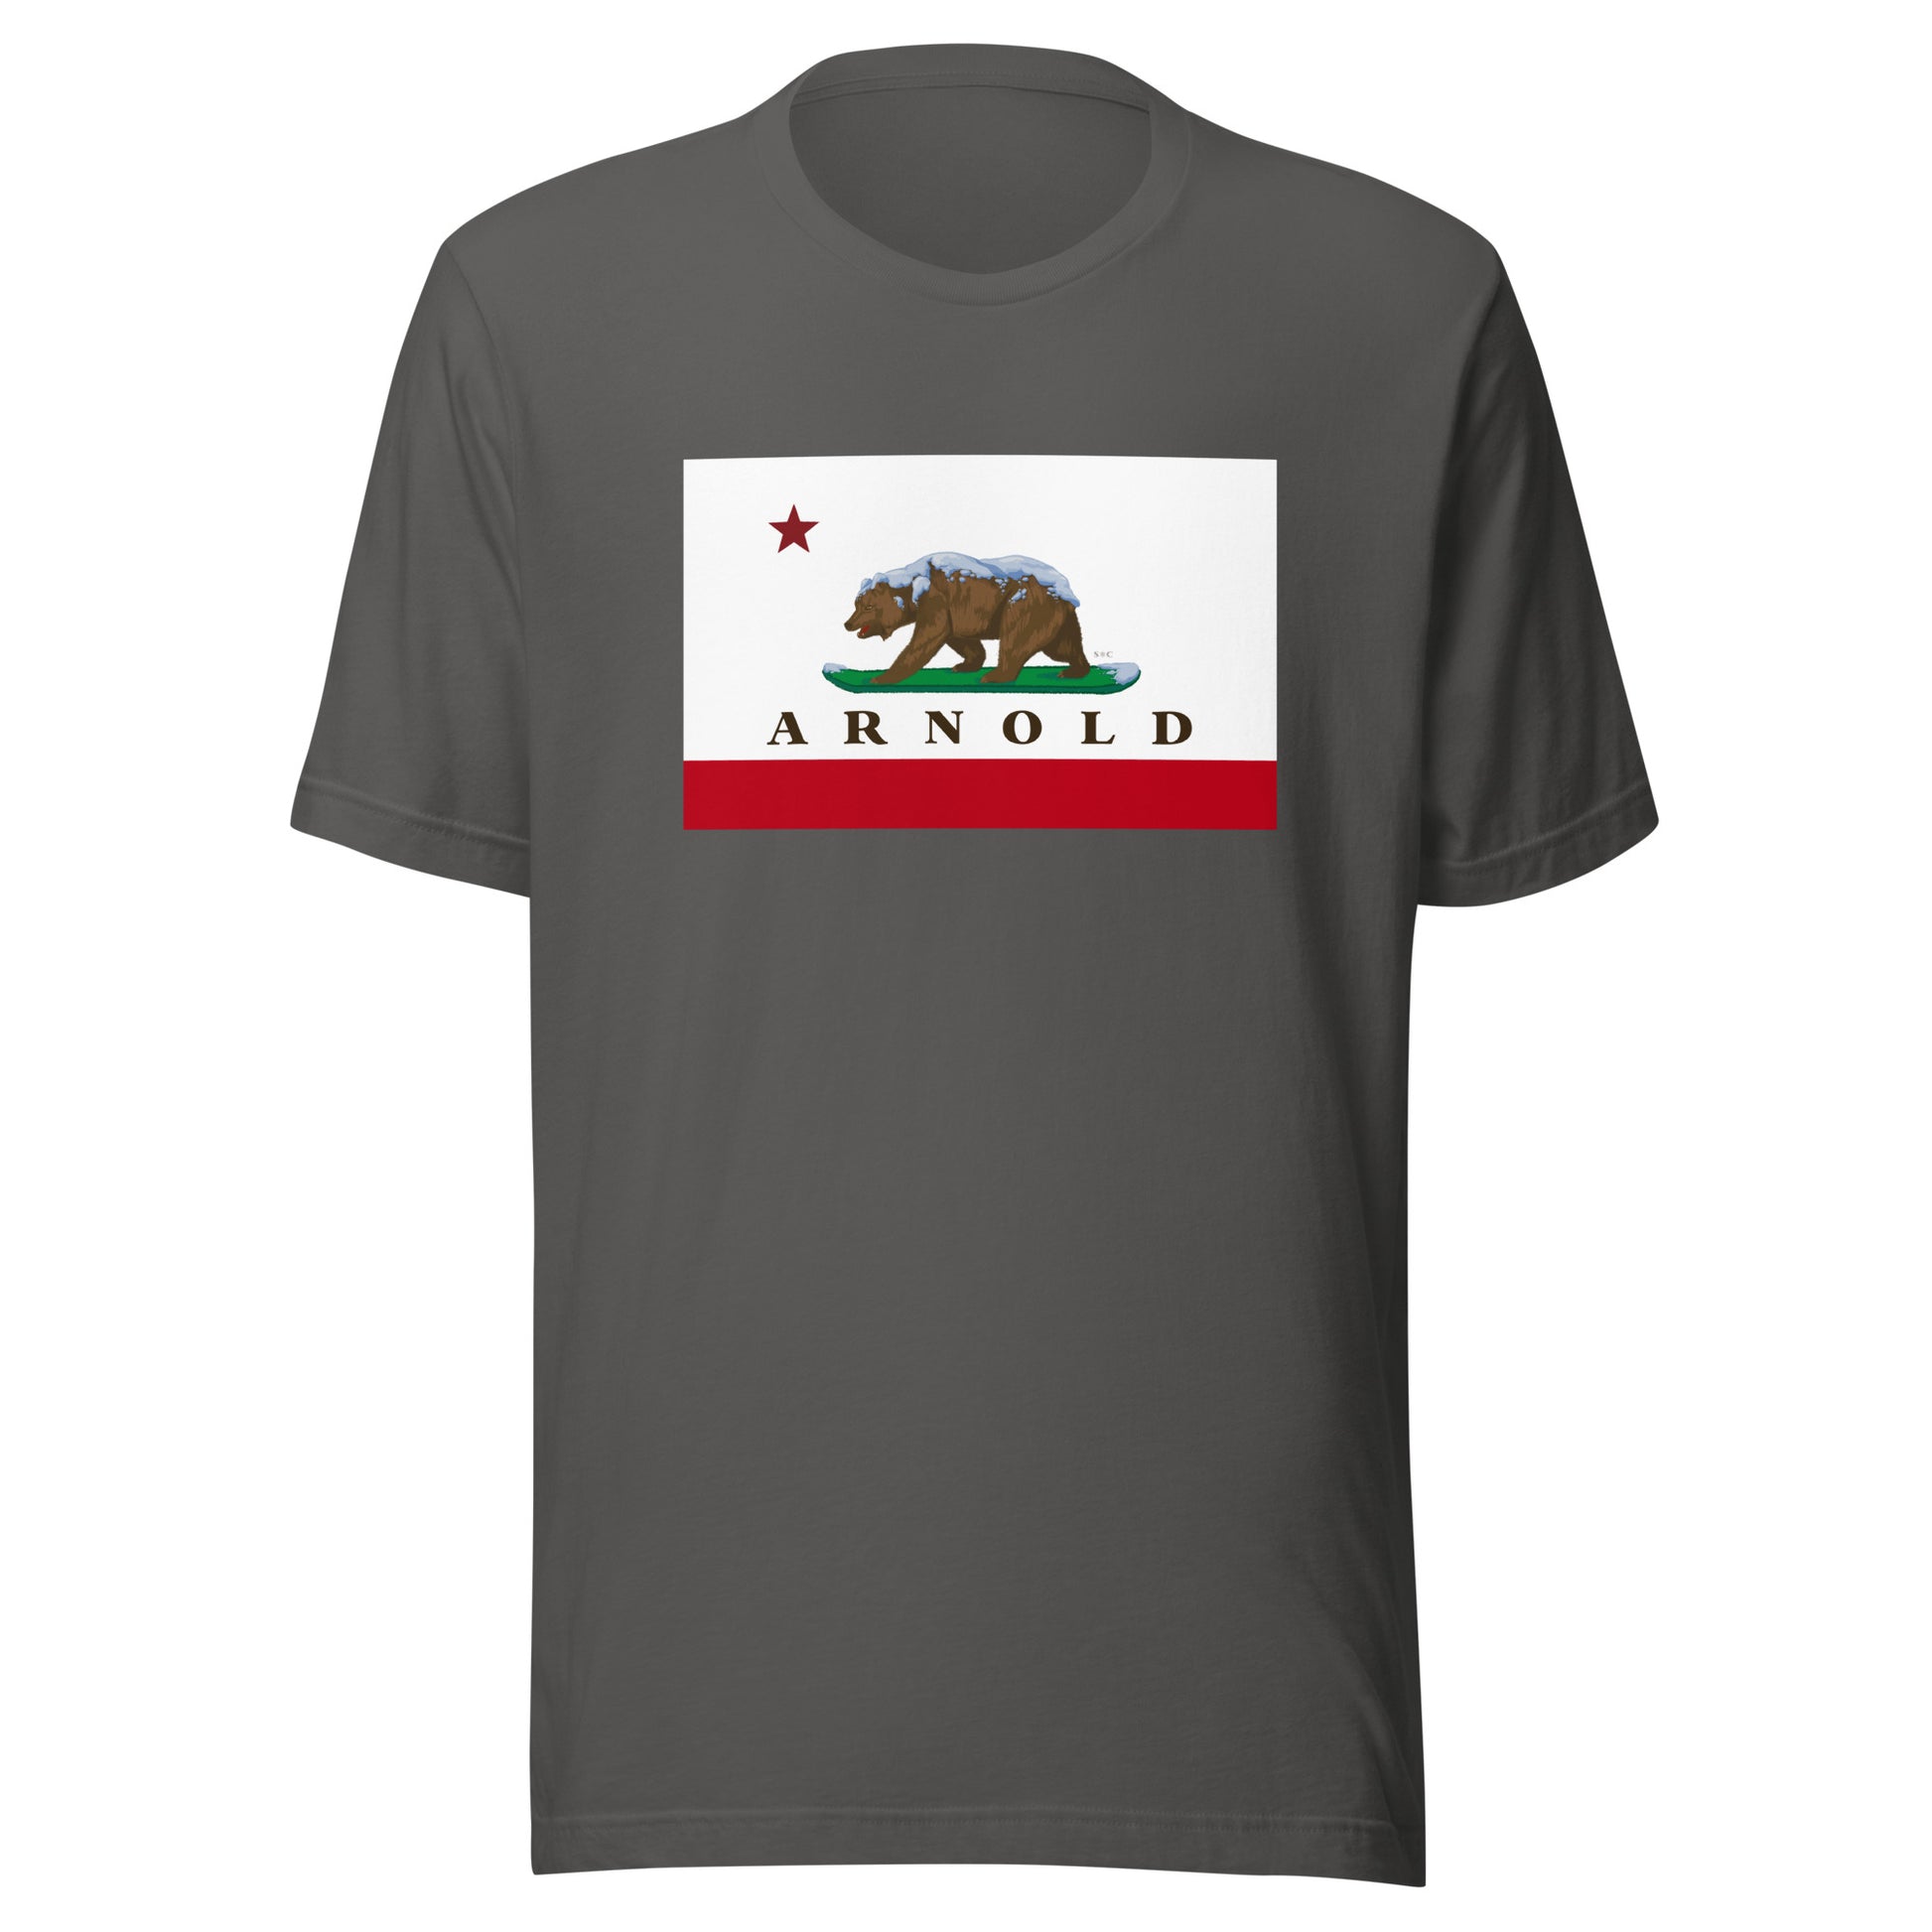 Grey Arnold California shirt